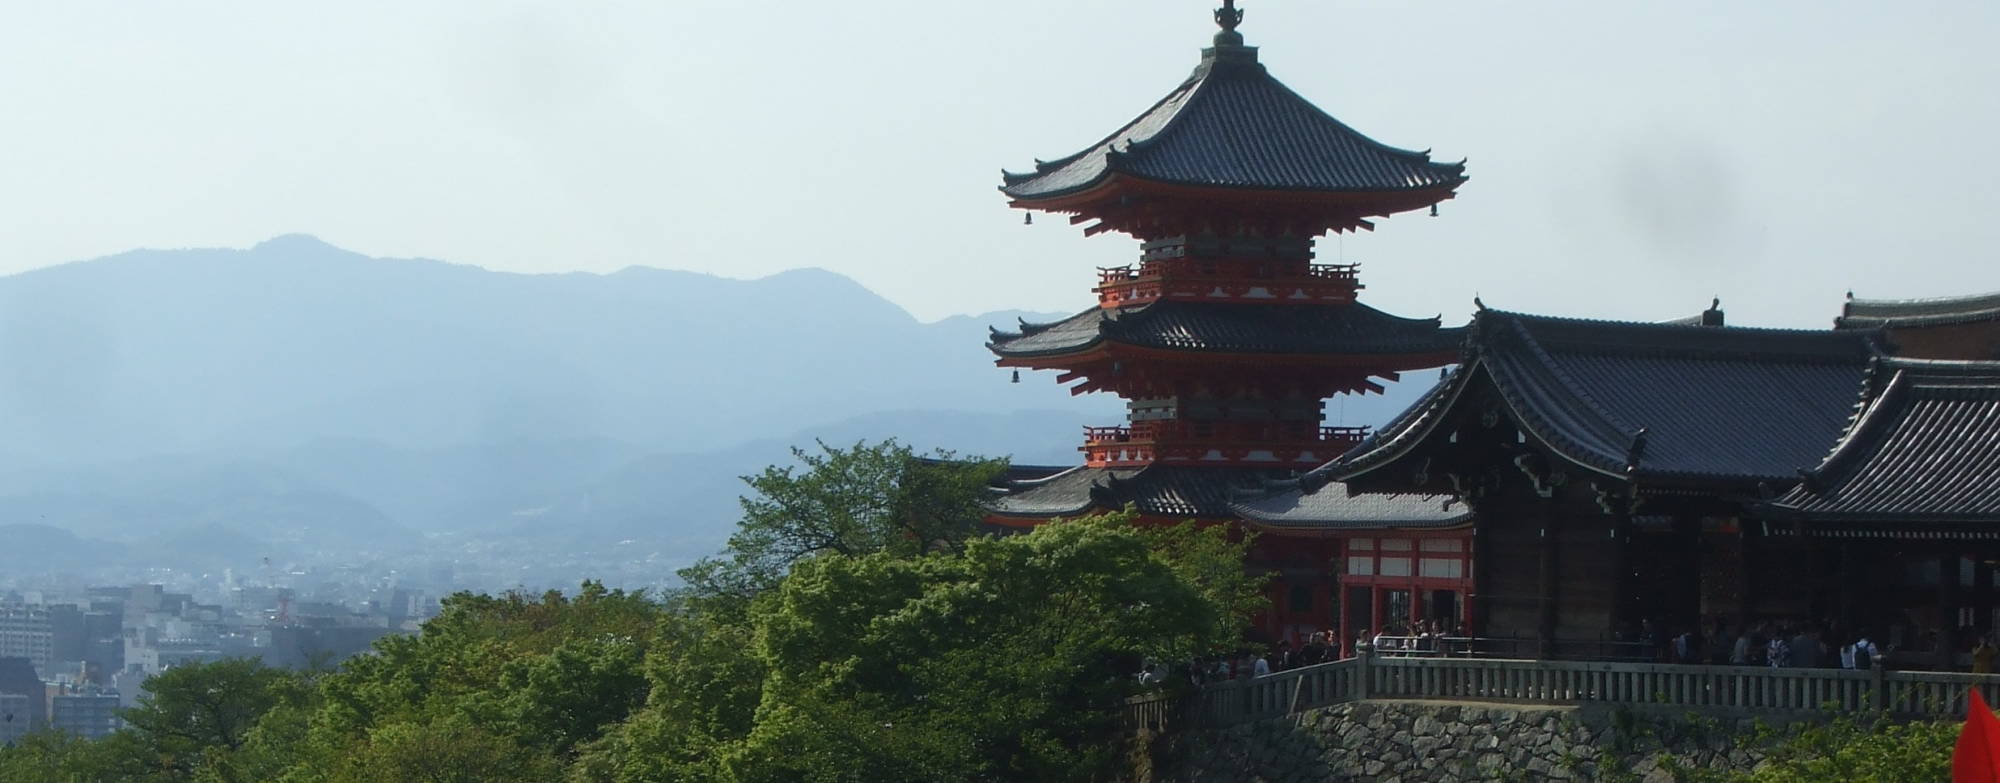 Pagoda at Kiyomizu-dera, overlooking Kyōto.